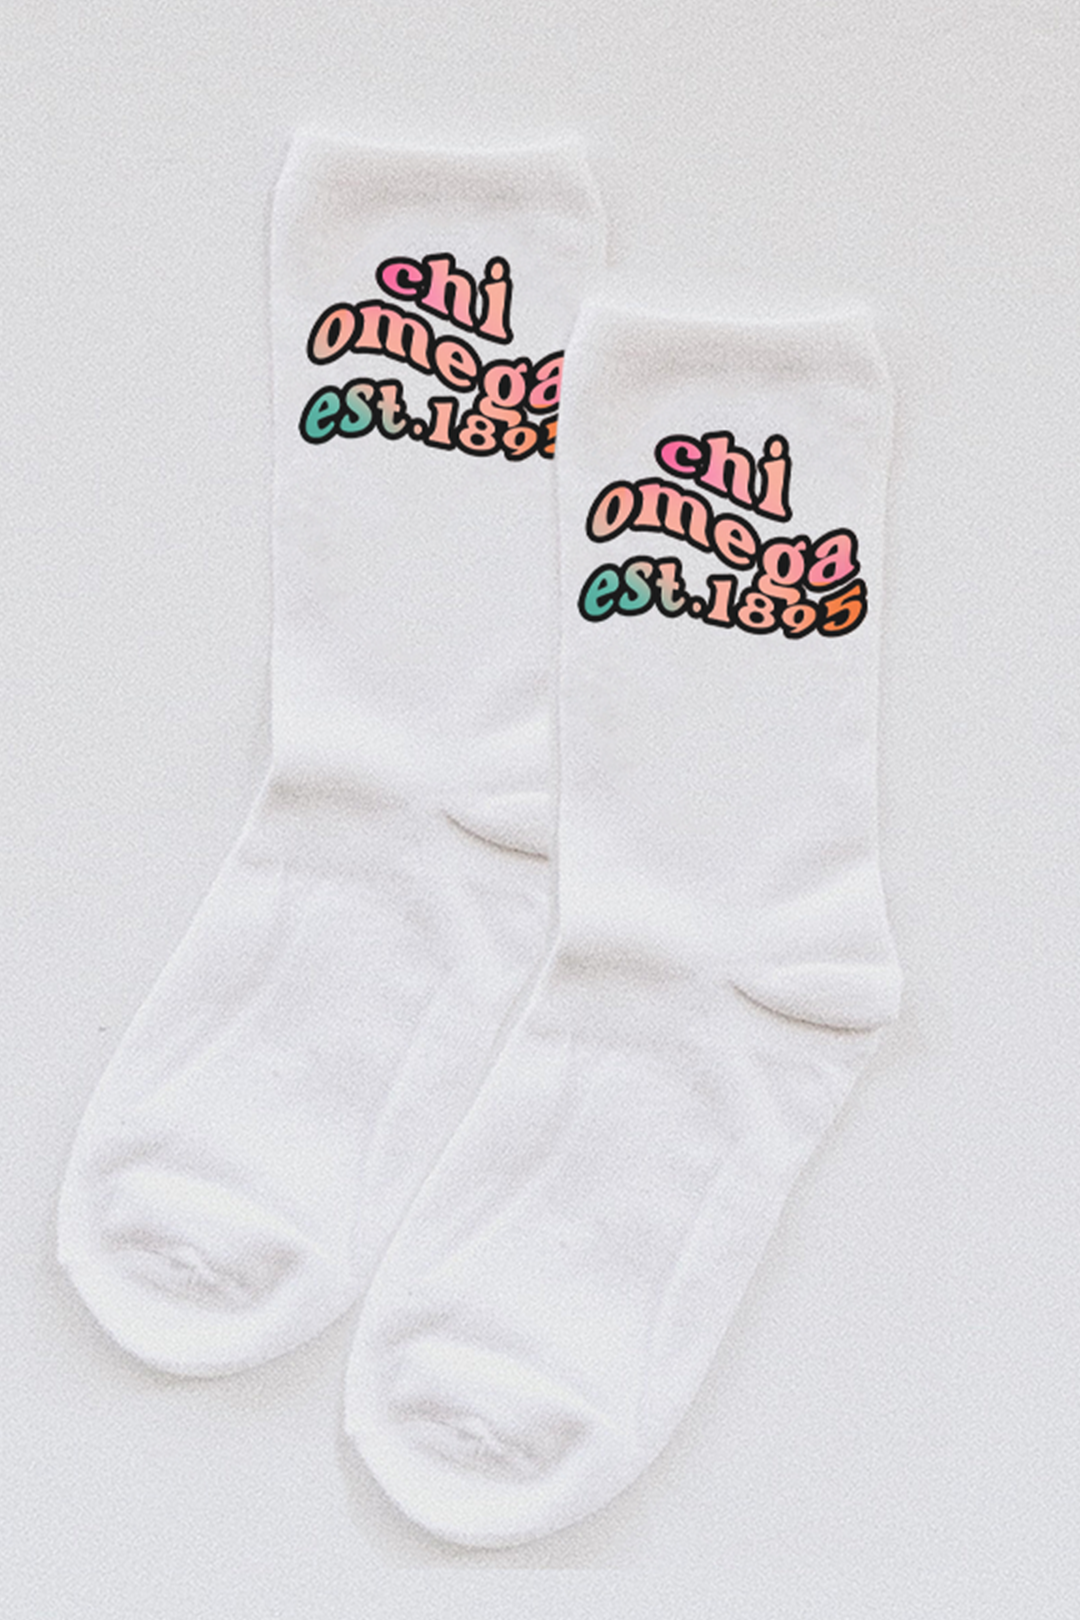 Gradient socks - Chi Omega